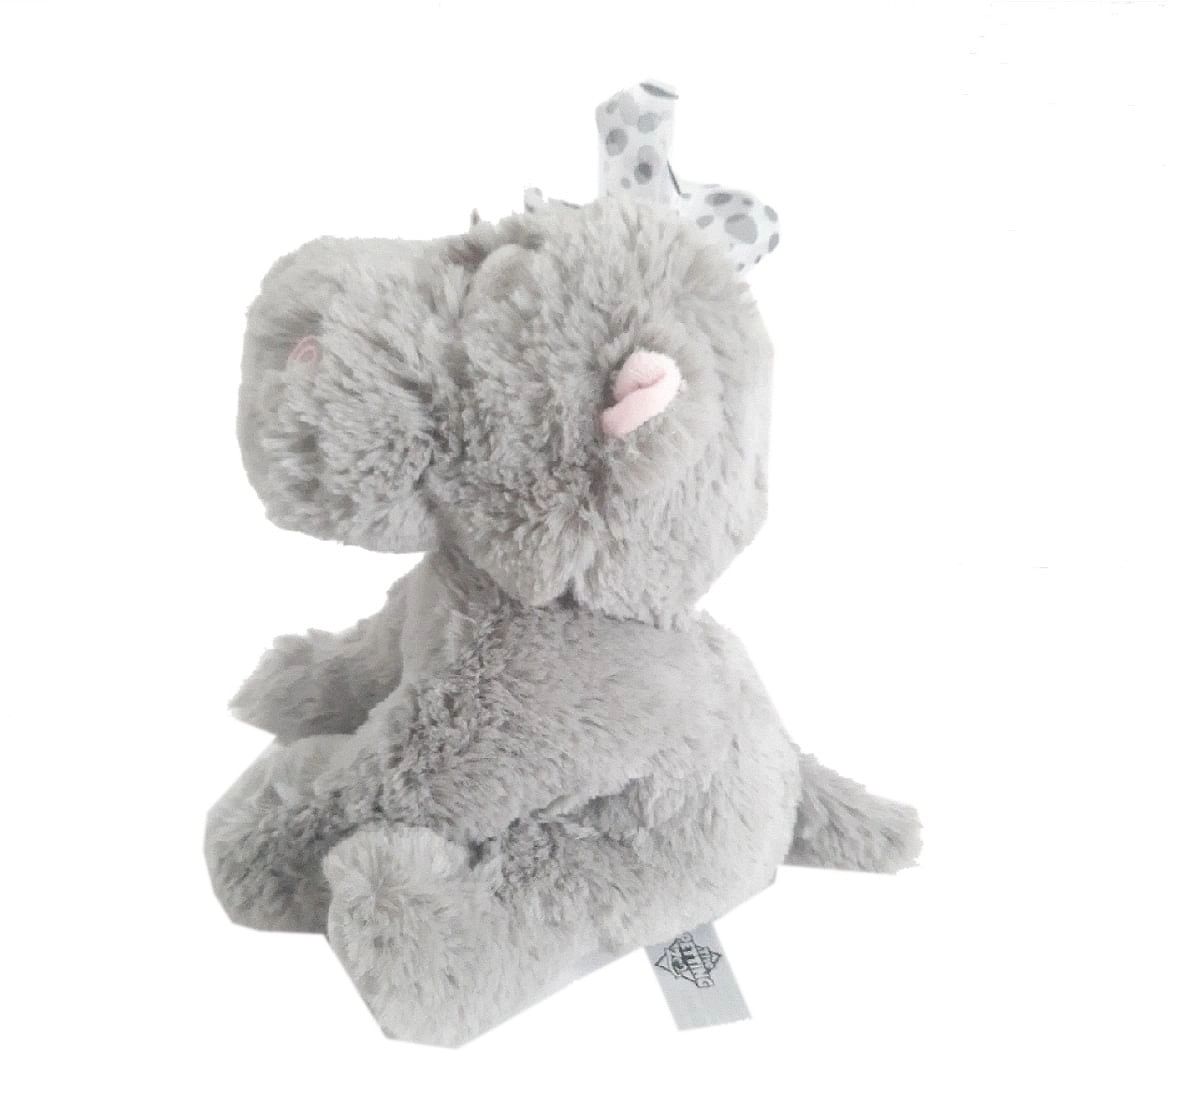 Lash Z Hippo Soft Toy 12"28Cm 